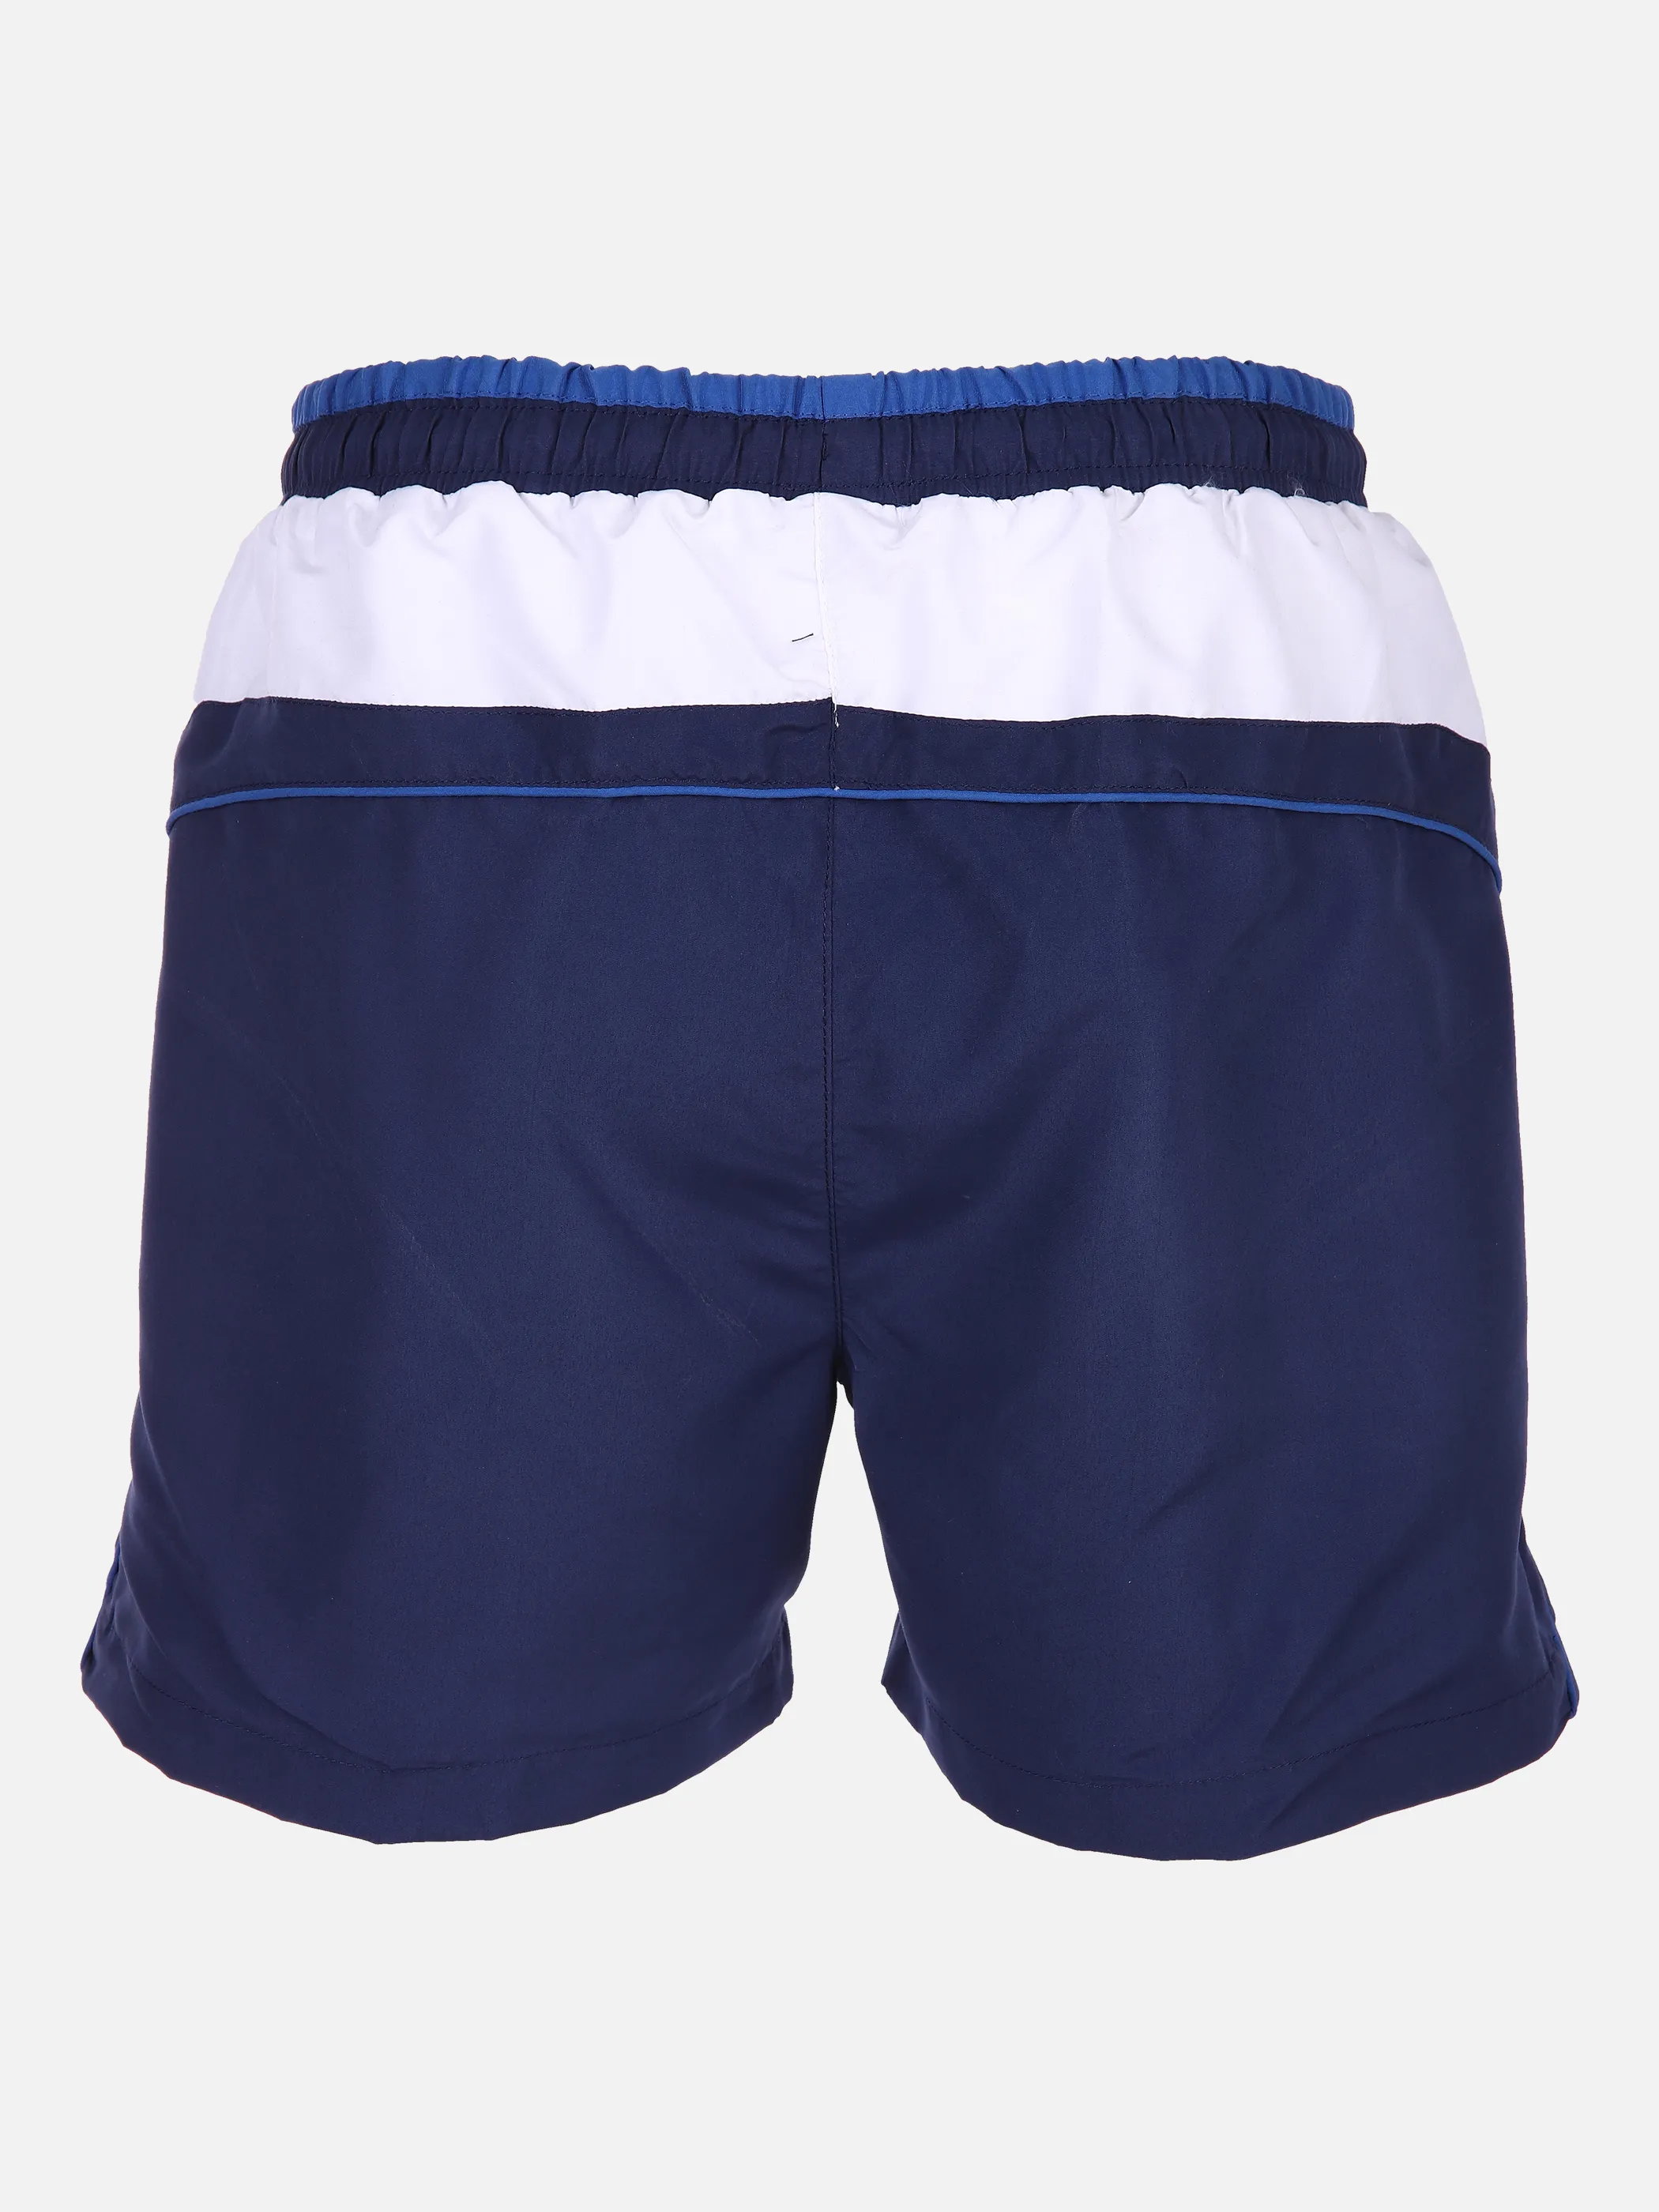 Grinario Sports He-Short Blau 839803 NAVY/BLUE 2